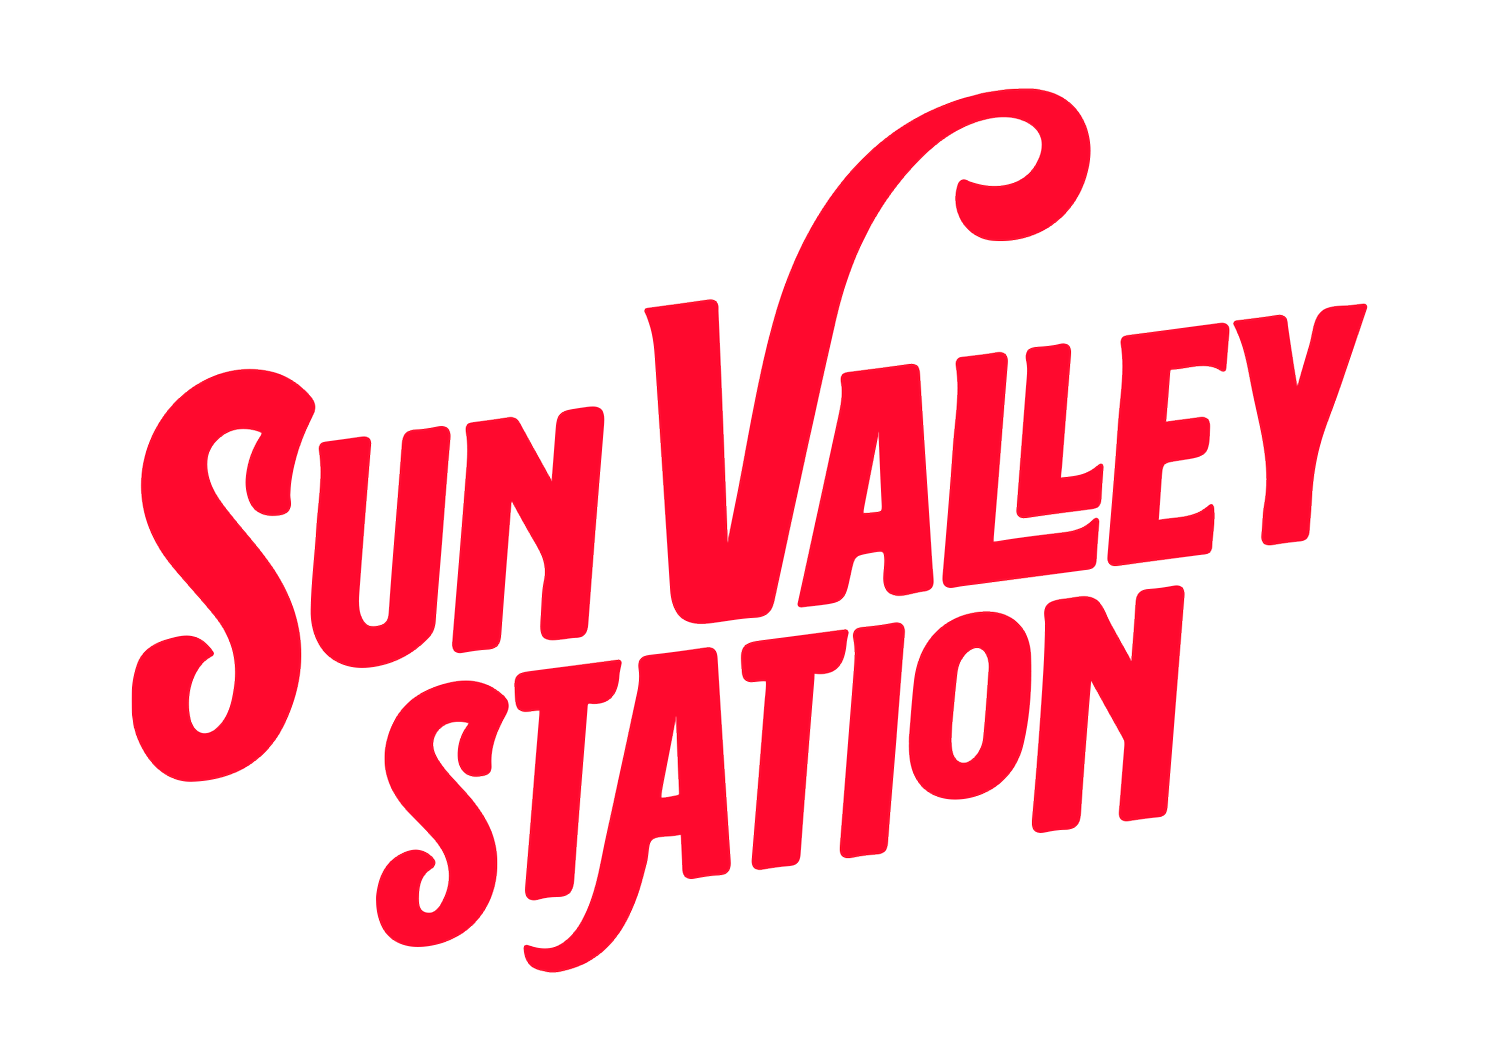 Sun Valley Station